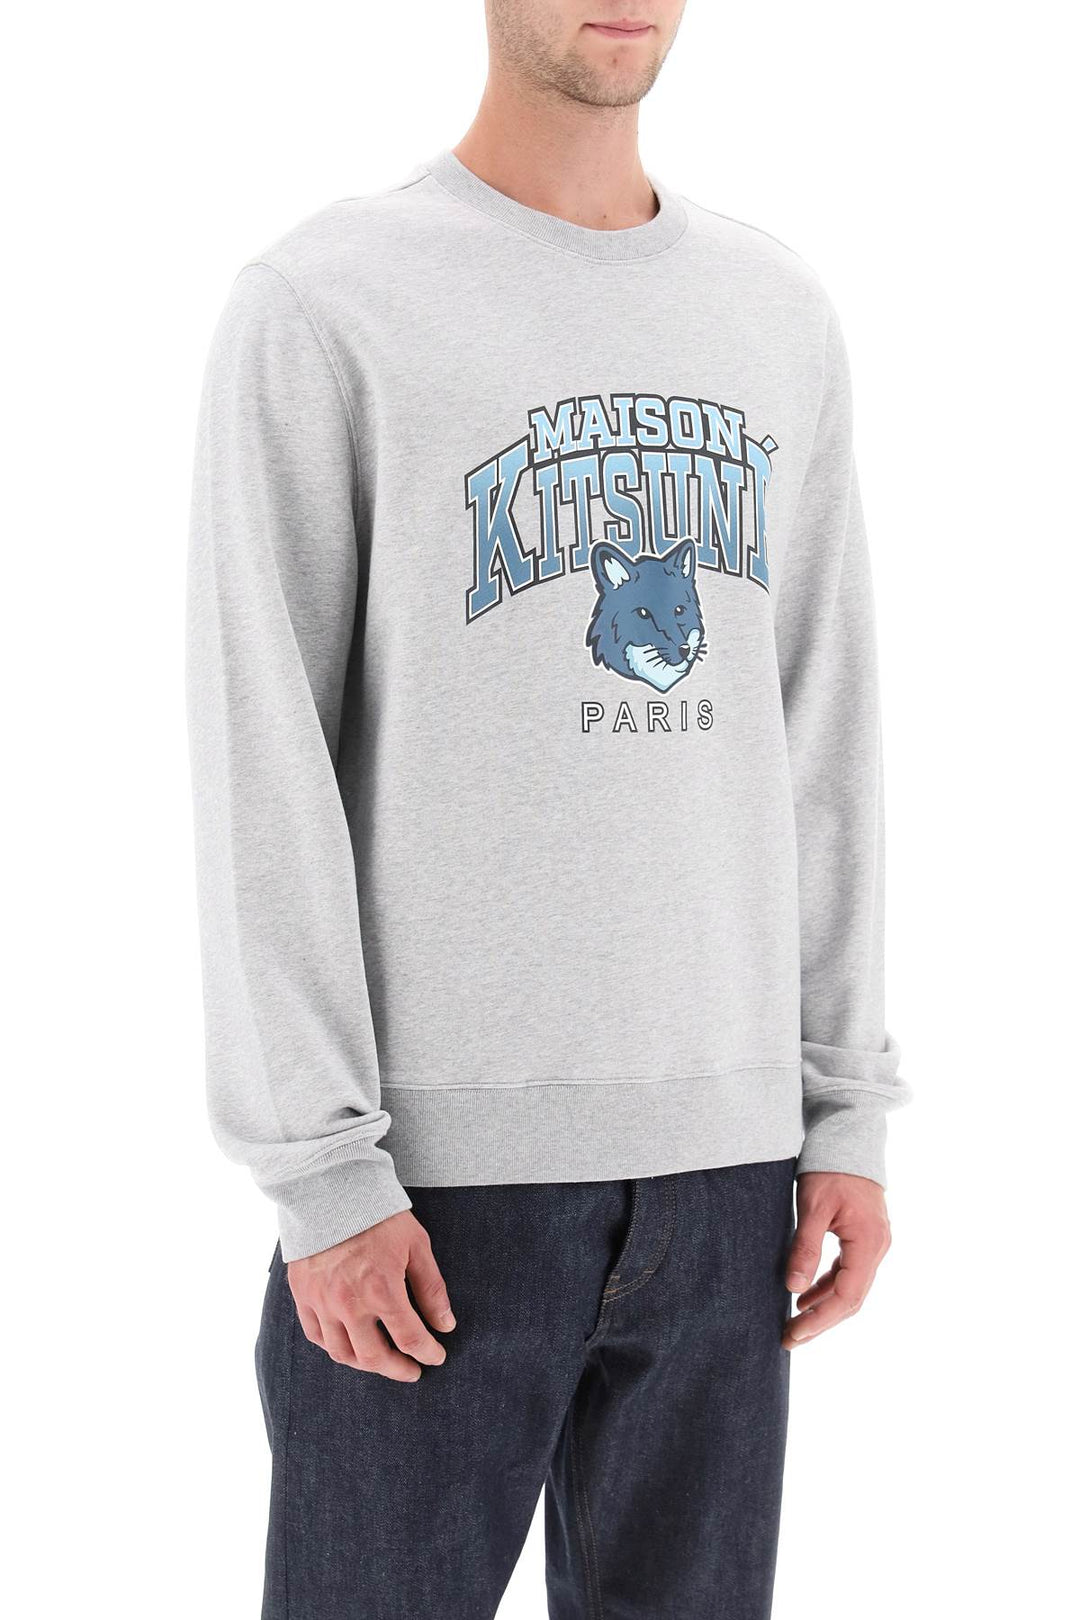 Maison Kitsune Crew Neck Sweatshirt With Campus Fox Print   Grigio